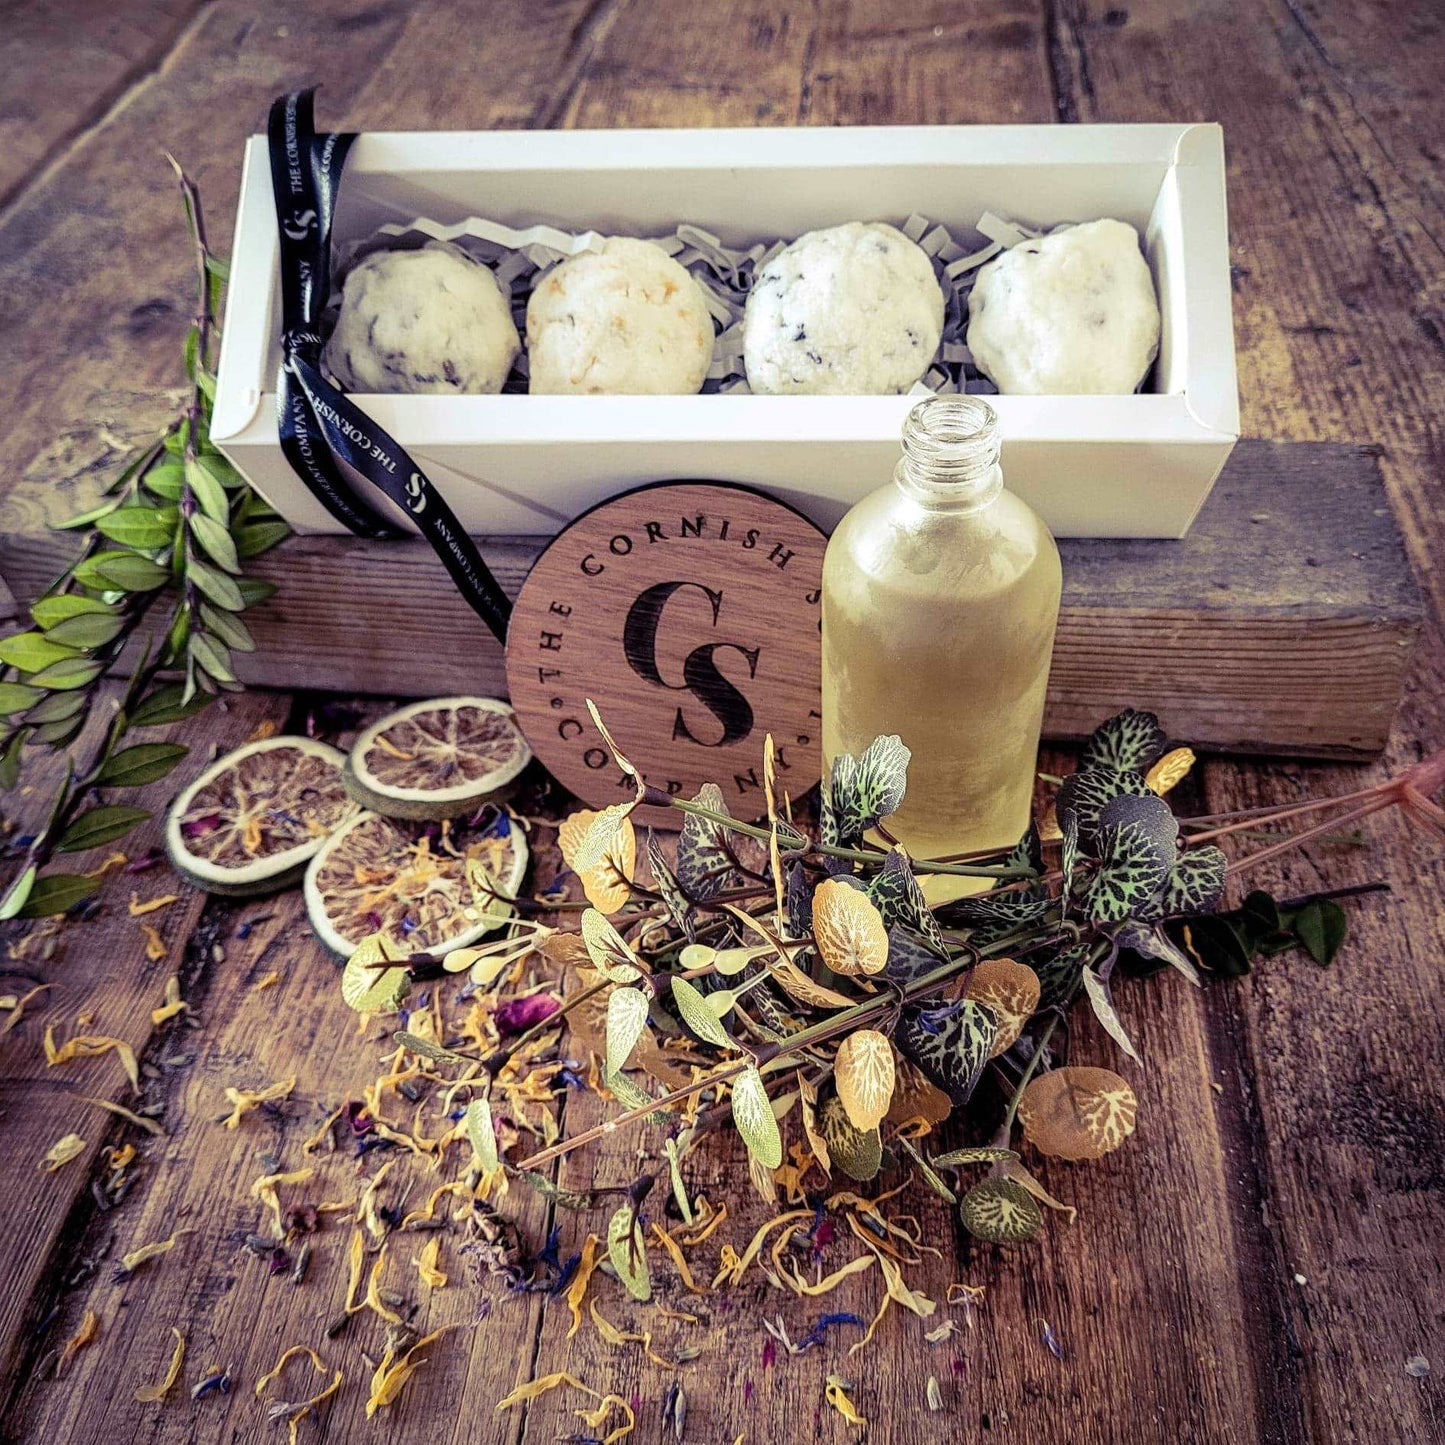 Luxurious bath melt truffles gift set - The Cornish Scent Company